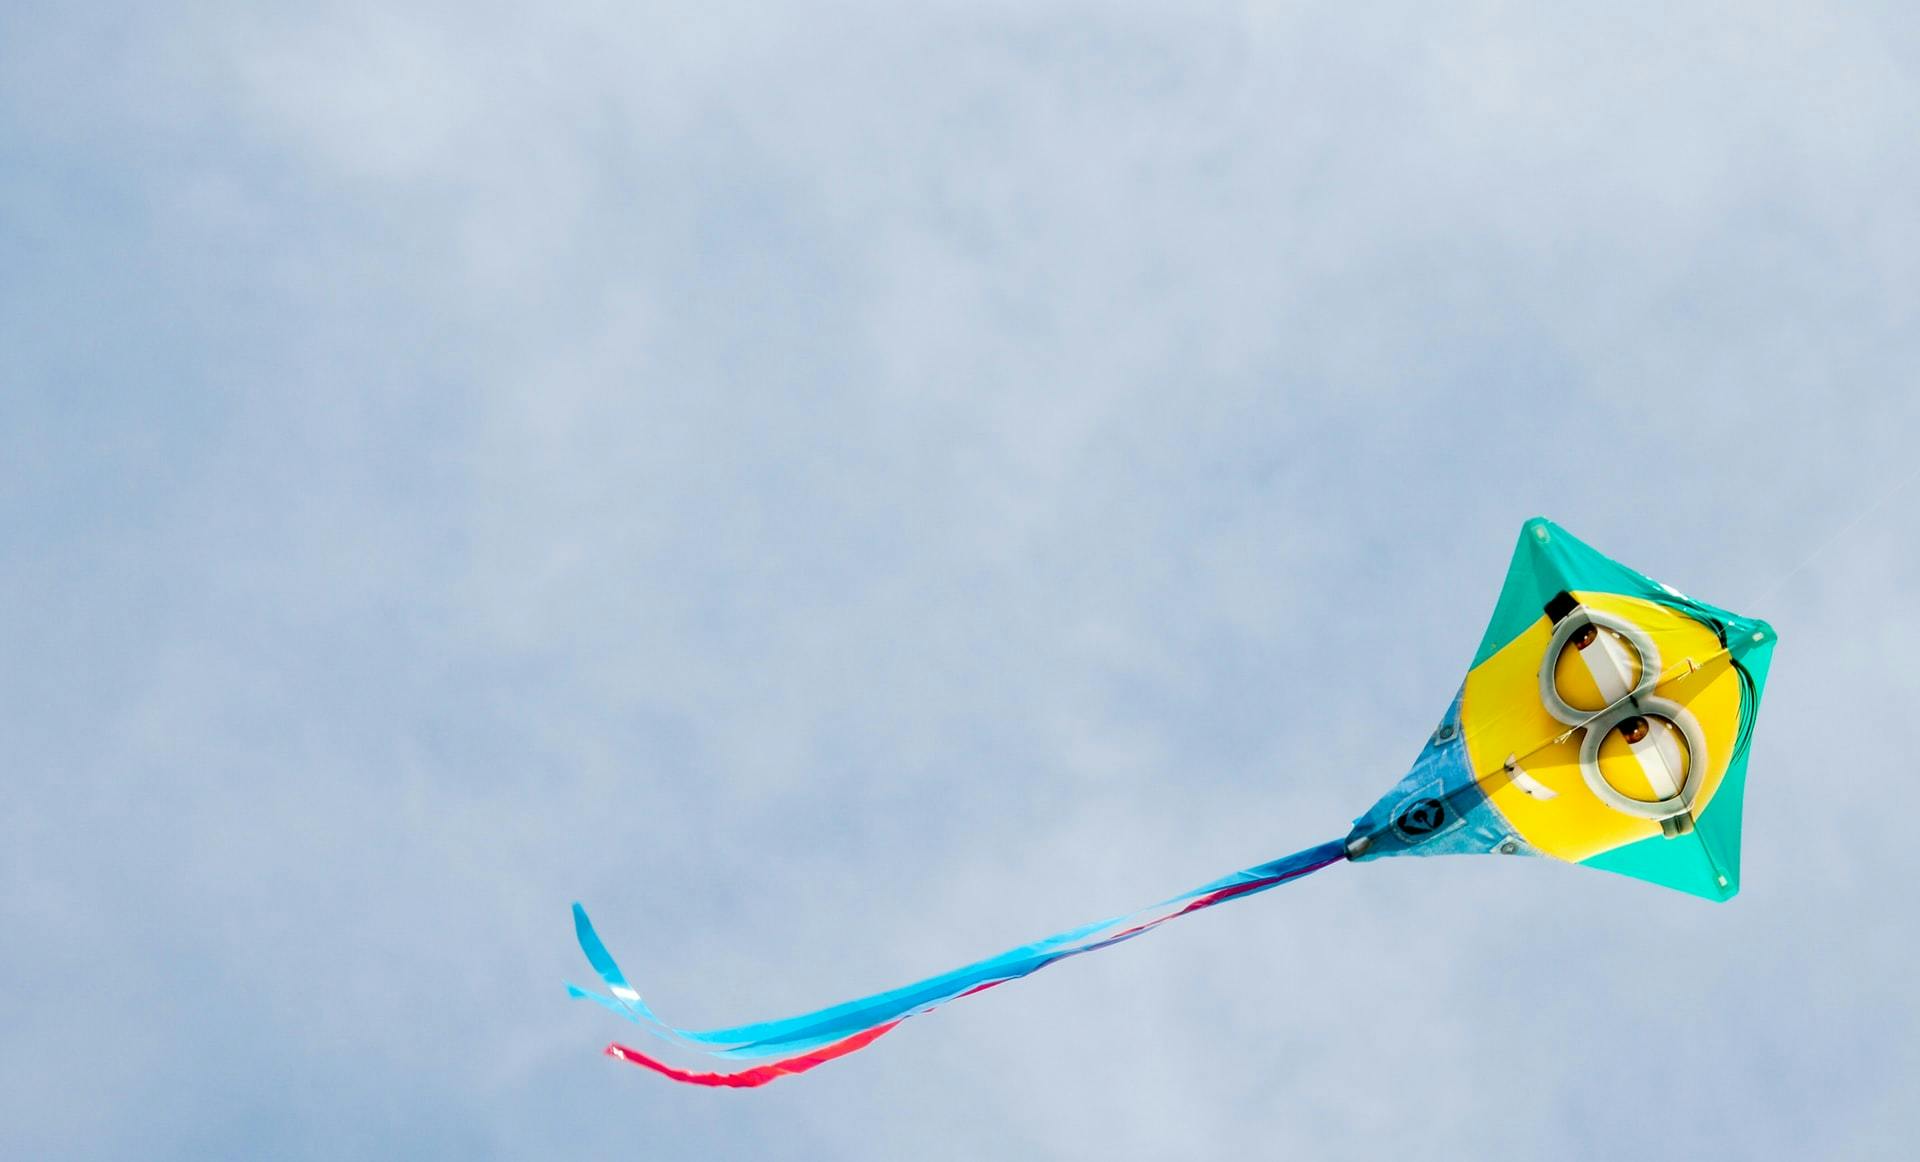 Minion Kite. Photo by Rene Vincit on Unsplash